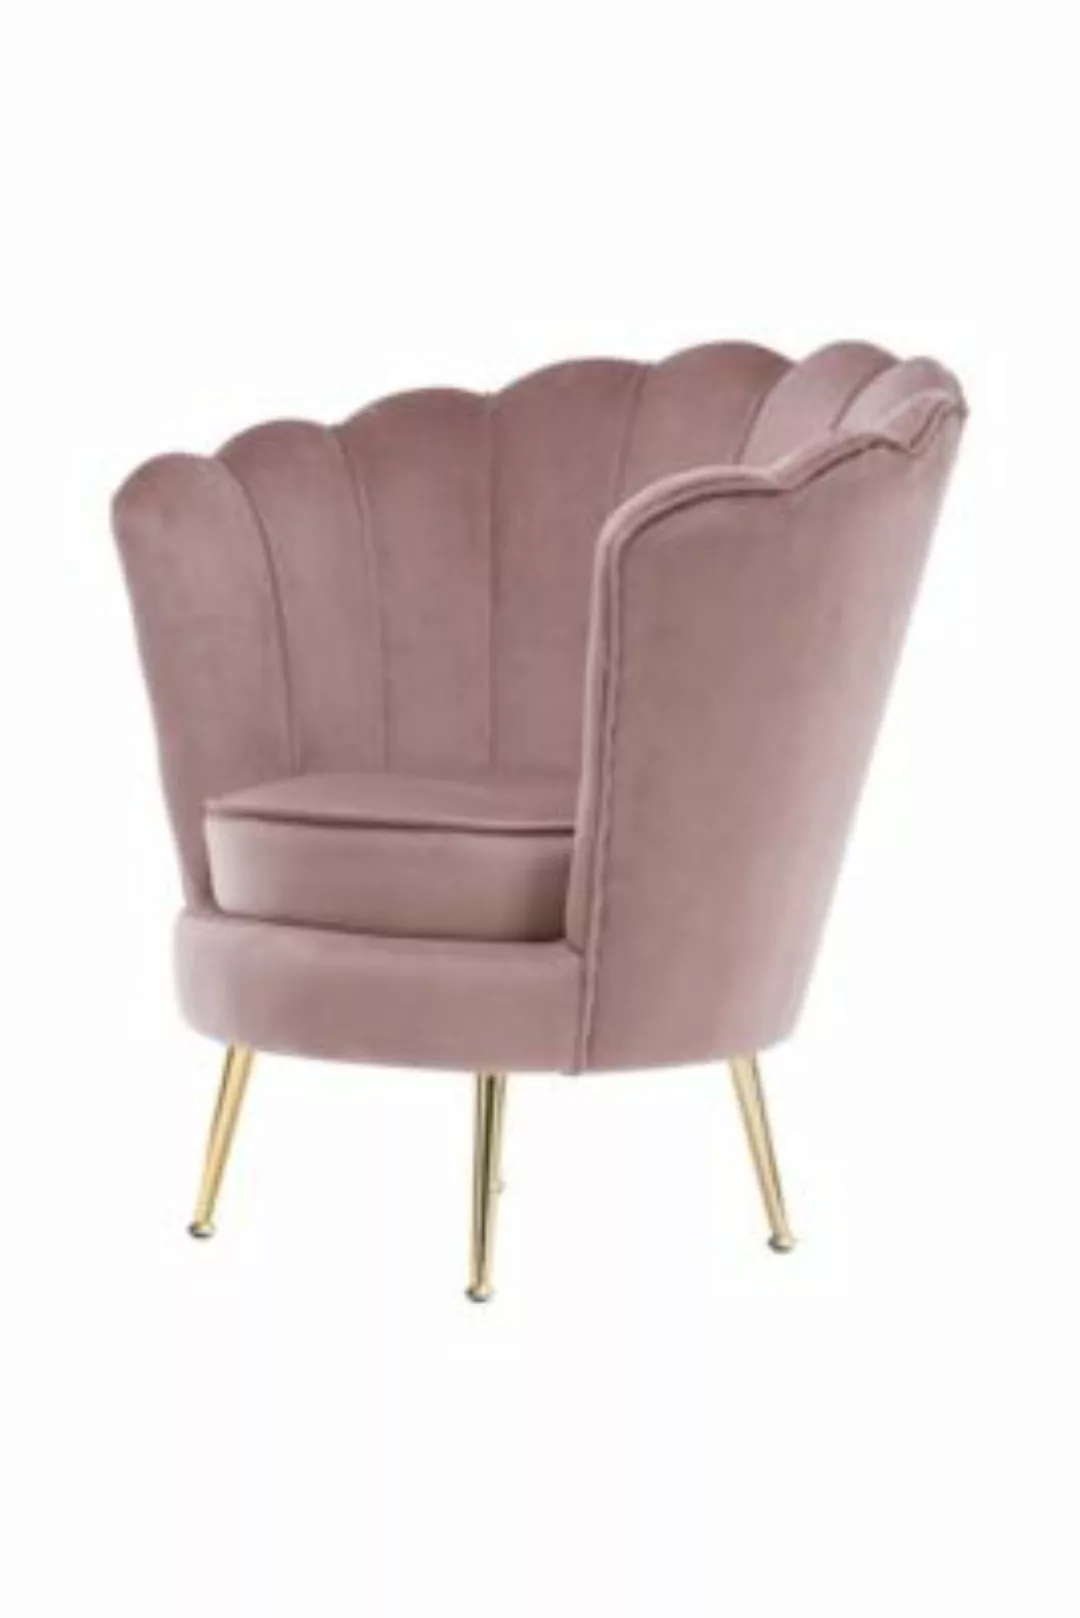 Kayoom Sessel Sofa / Sessel Barbara 125 Rosa rosa günstig online kaufen